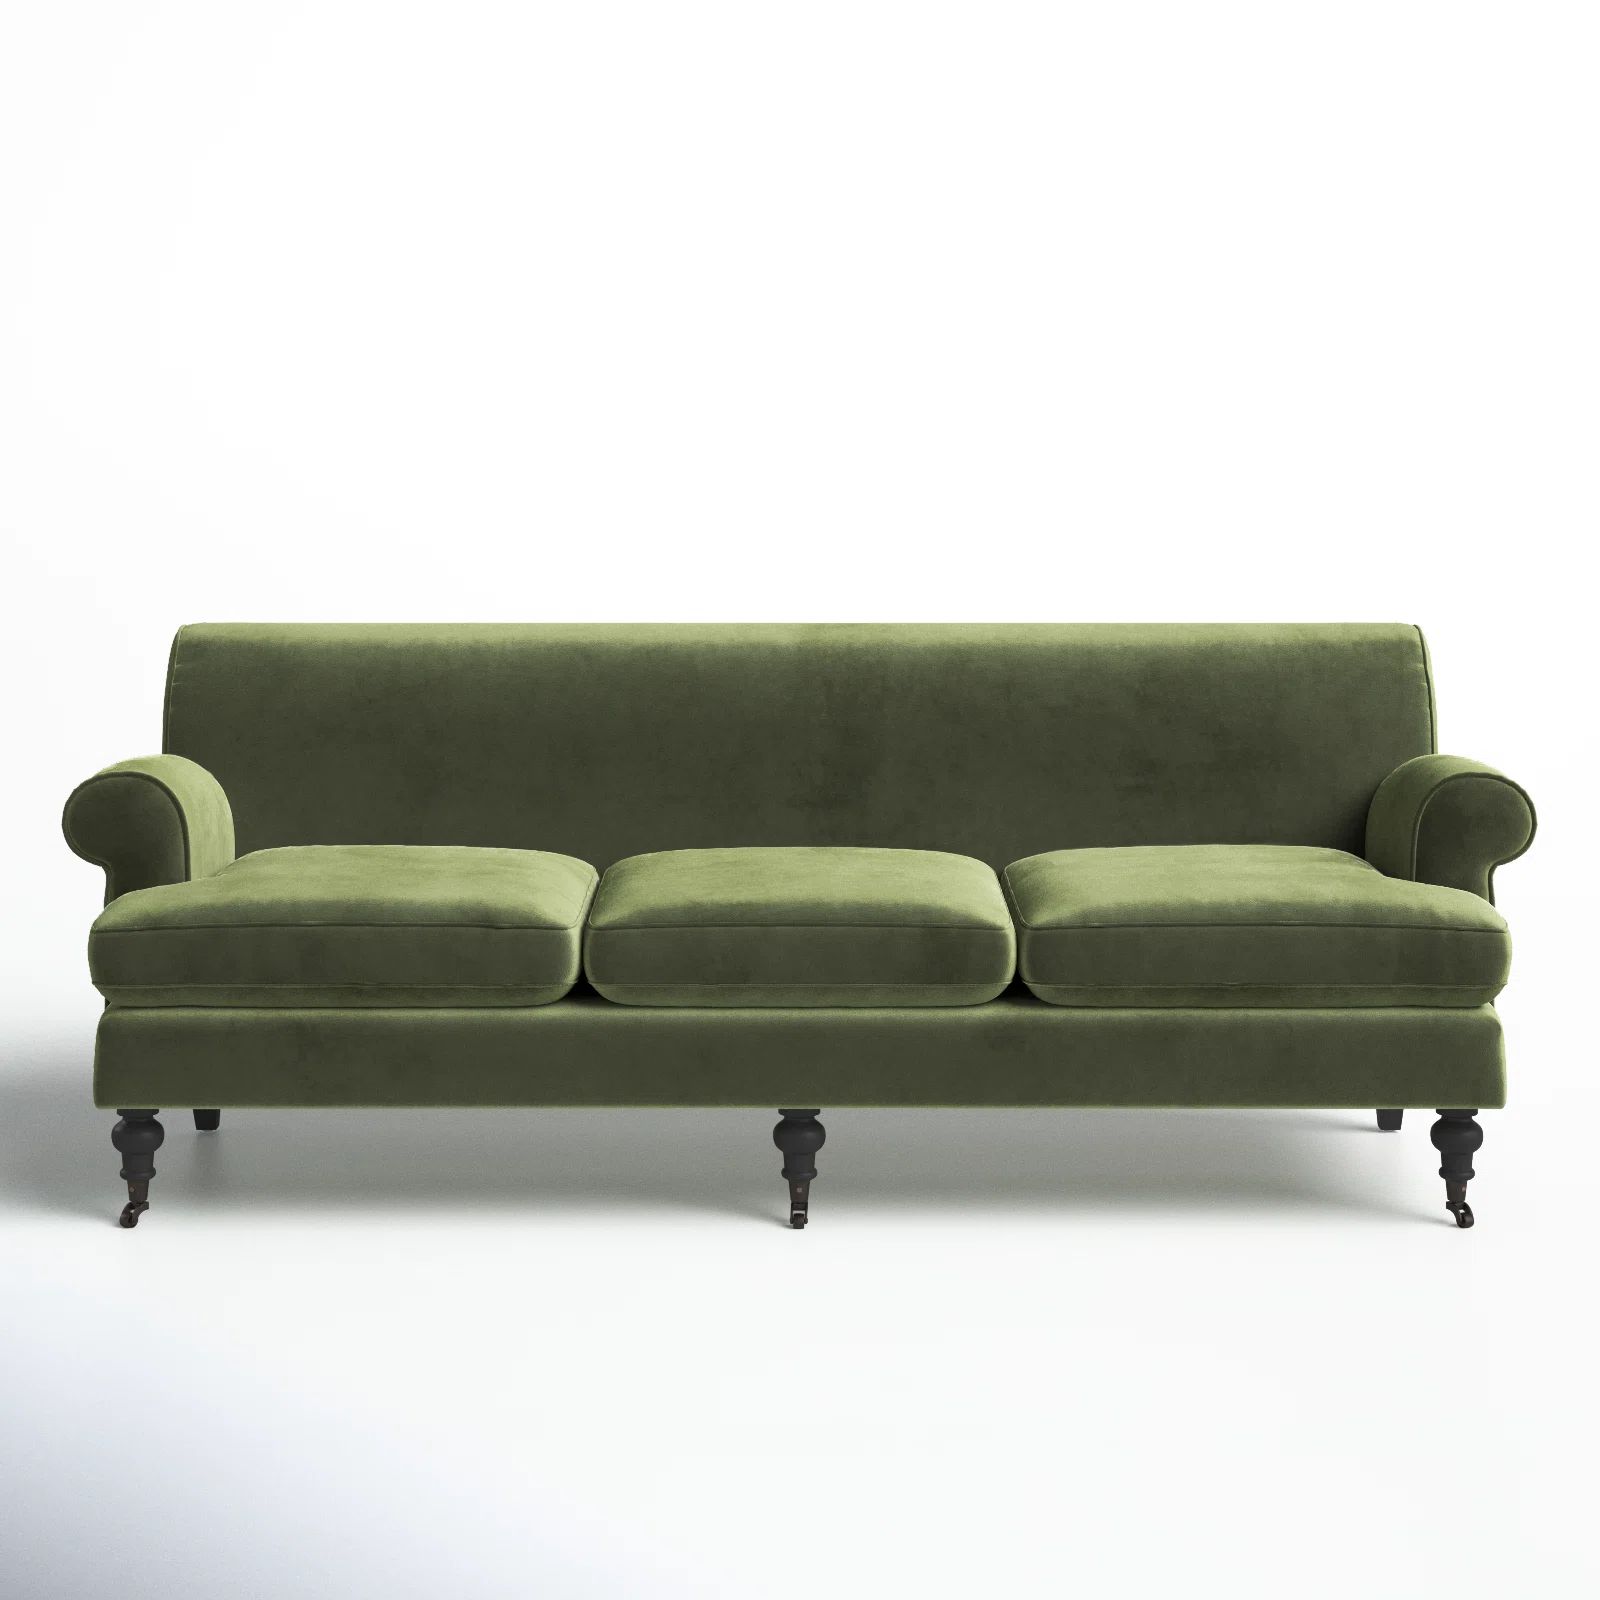 Harbour 88'' Upholstered Sofa | Wayfair North America